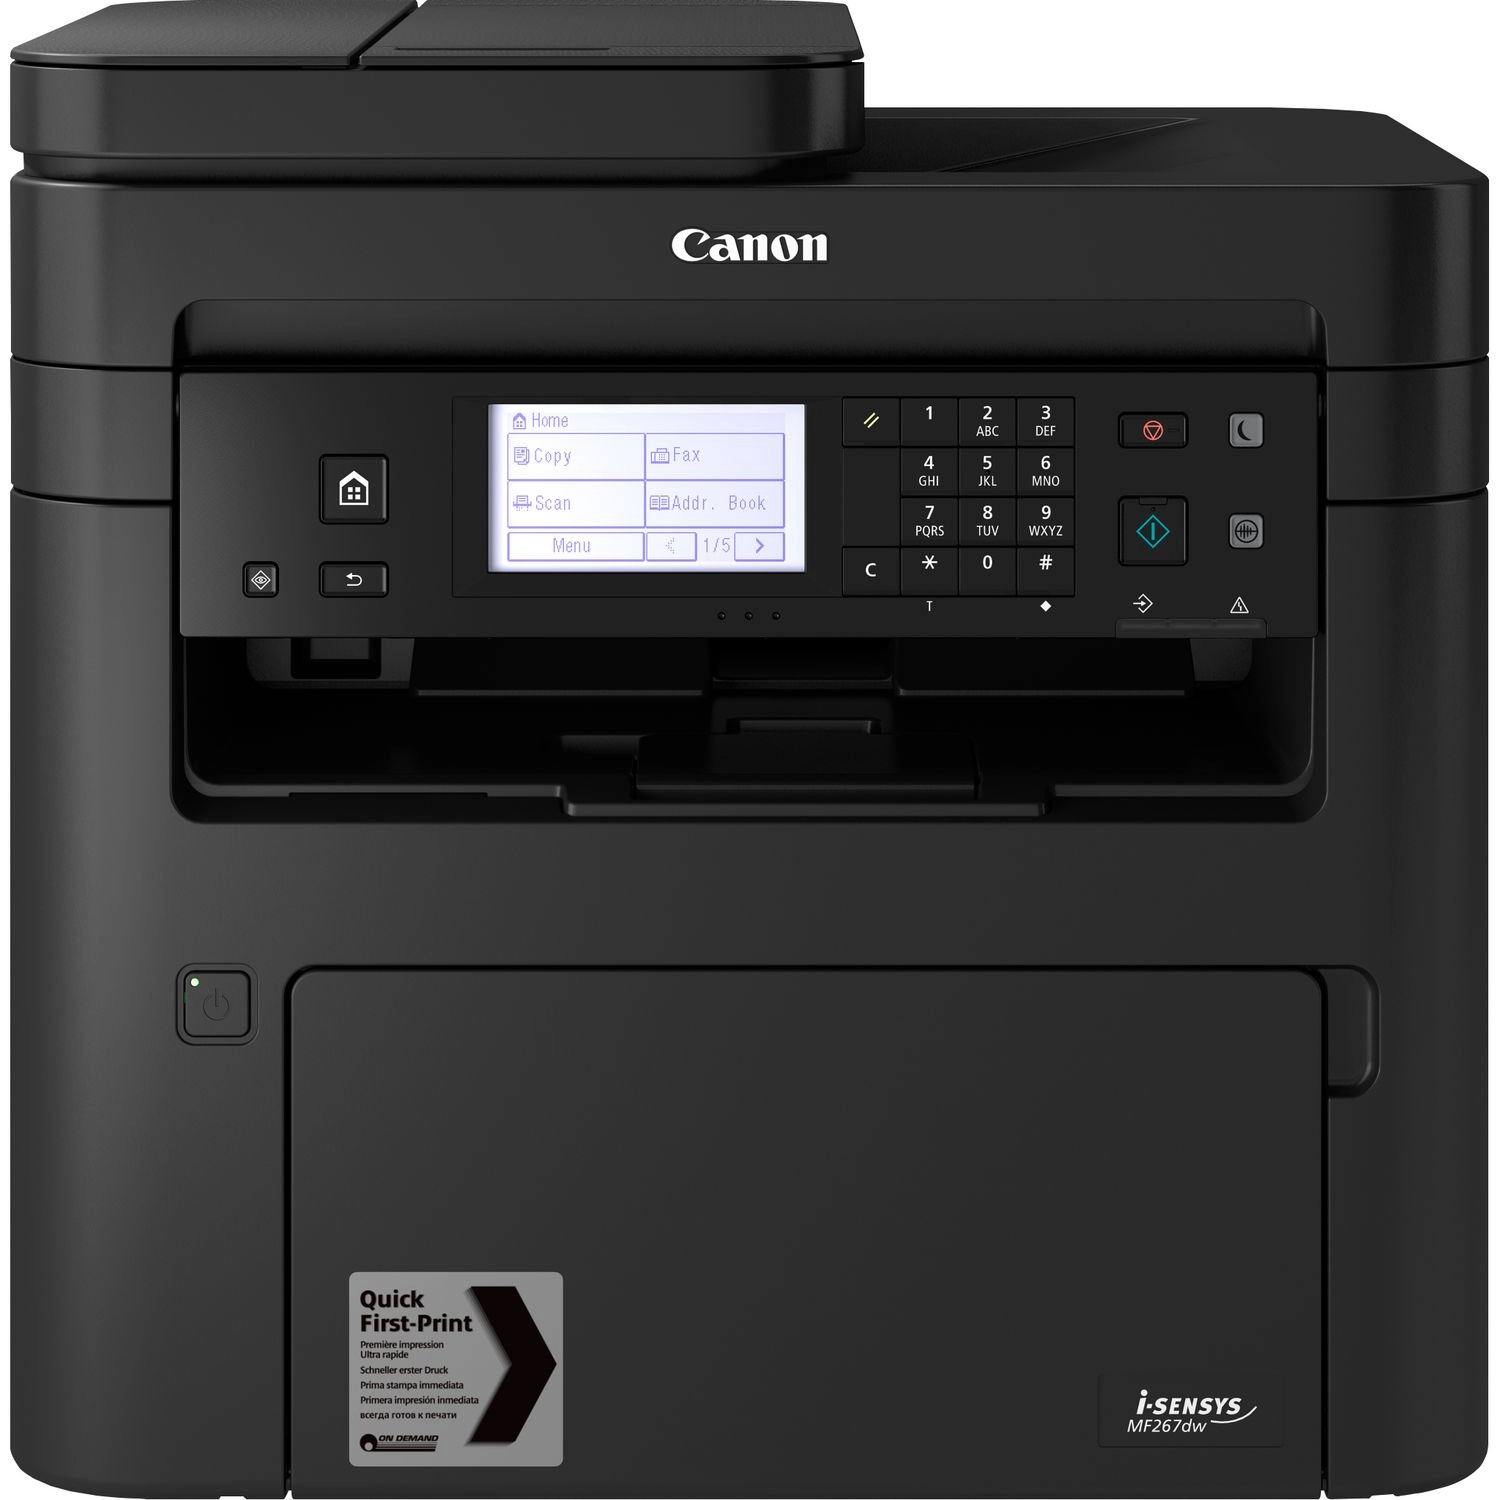 MFD Canon i-Sensys MF267DW, Mono Printer/Copier/Color Scanner/Fax, DADF(35-sheet),Duplex,Net,WiFi, A4, 28ppm, 512Mb, 1200x1200dpi, 60-163г/м2, Scan 9600x9600dpi-24 bit, 250sheet tray,B&W Touch Screen,Max.15k ppm,Cartridge 051/051H(4100 pages*)